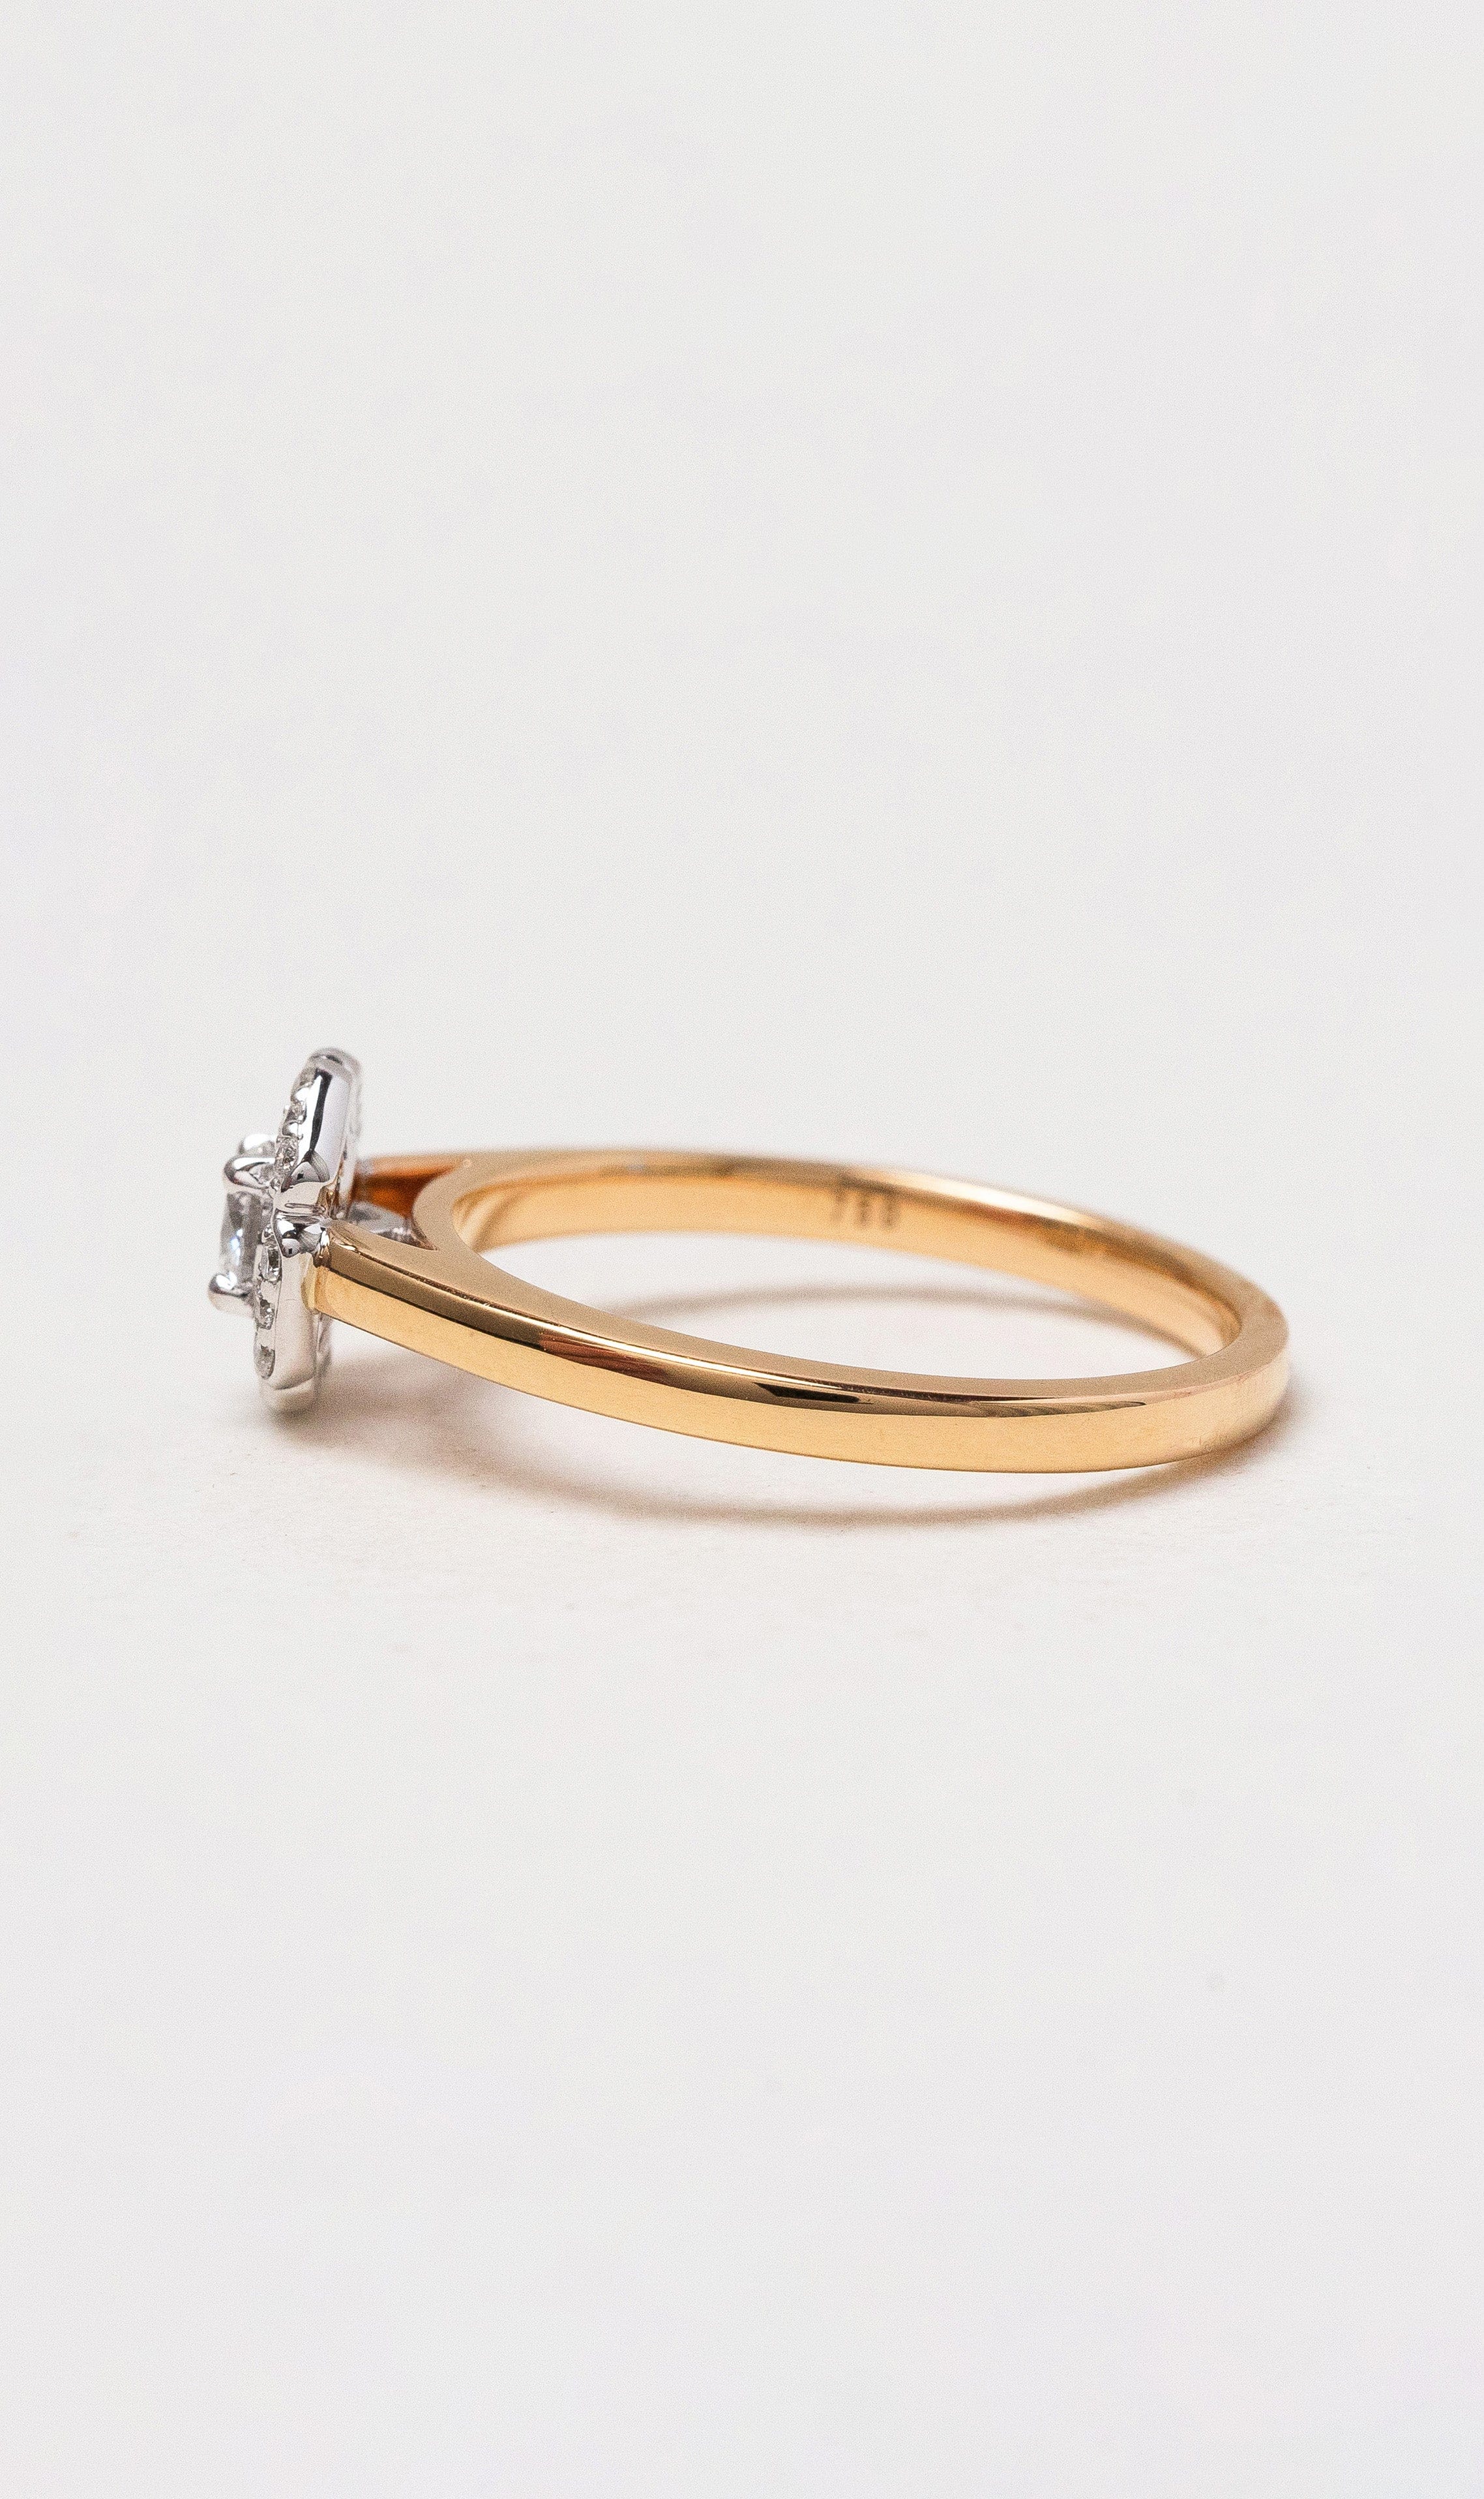 Hogans Family Jewellers 18K RG Floral Halo Diamond Ring